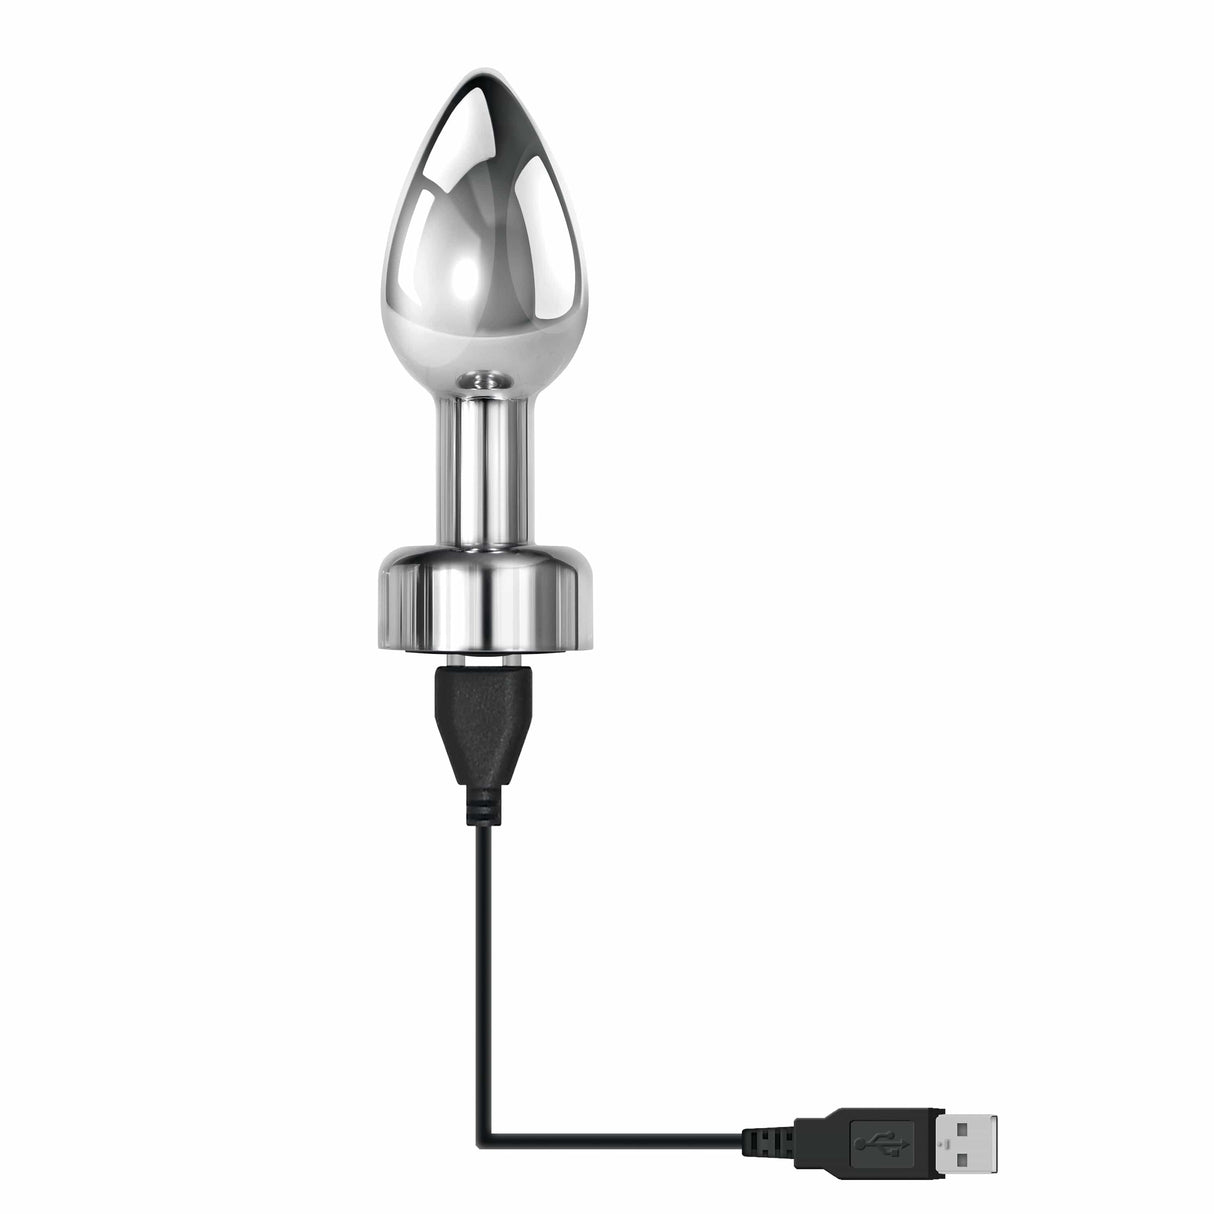 Evolved - Gender X Rockin Vibrating Metal Anal Plug (Silver)    Metal Anal Plug (Vibration) Rechargeable